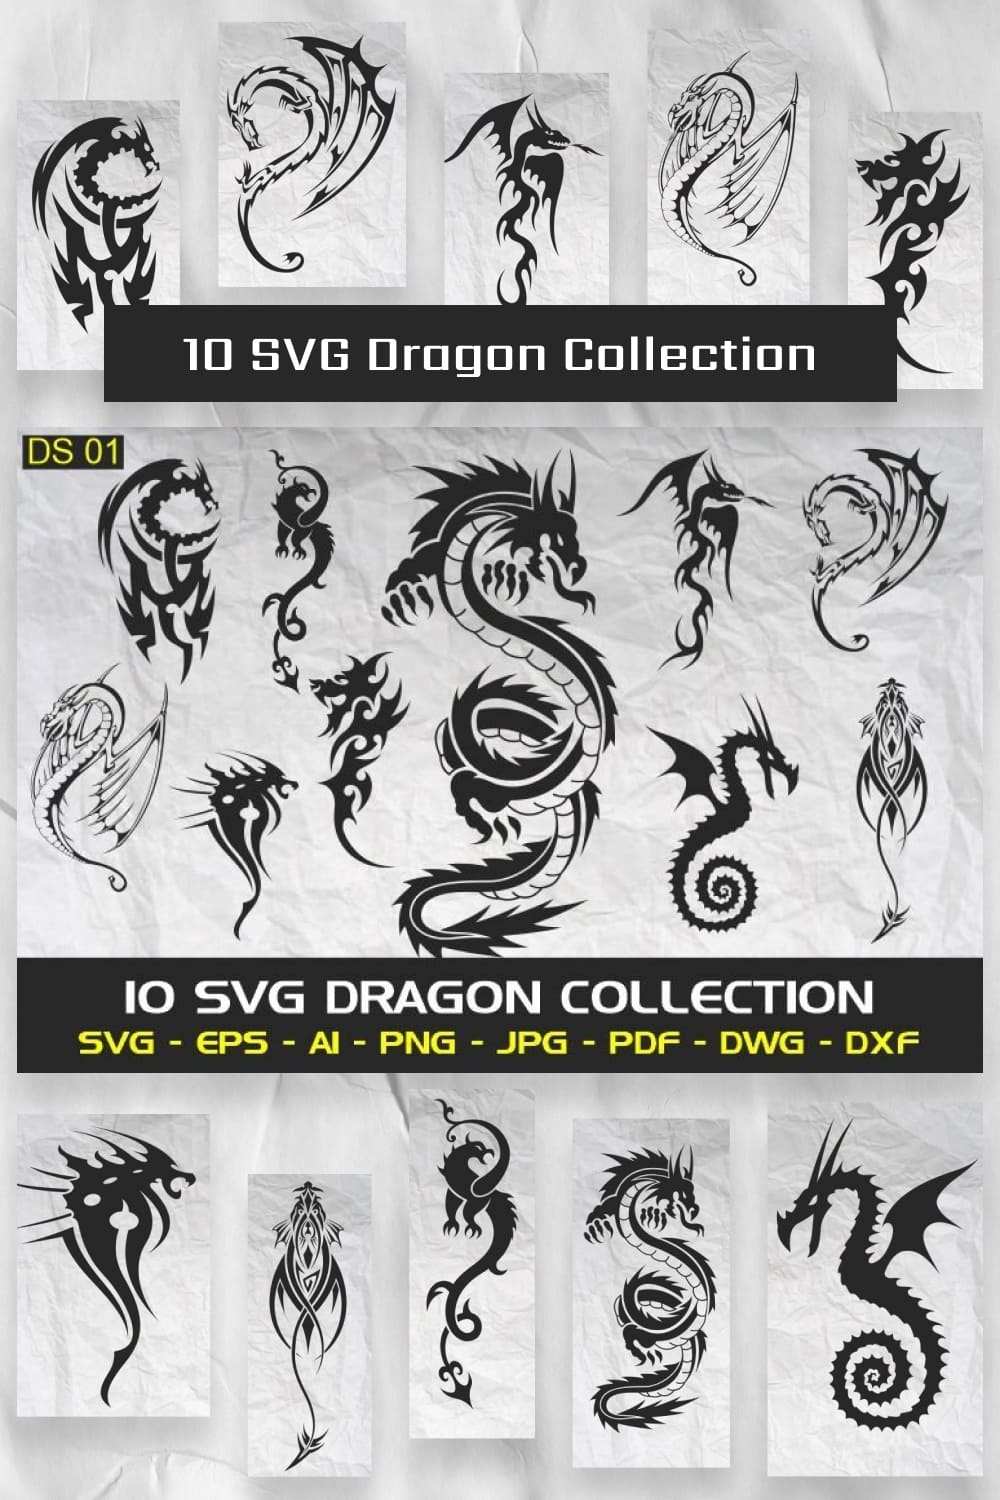 10 svg dragon collection pinterest image.